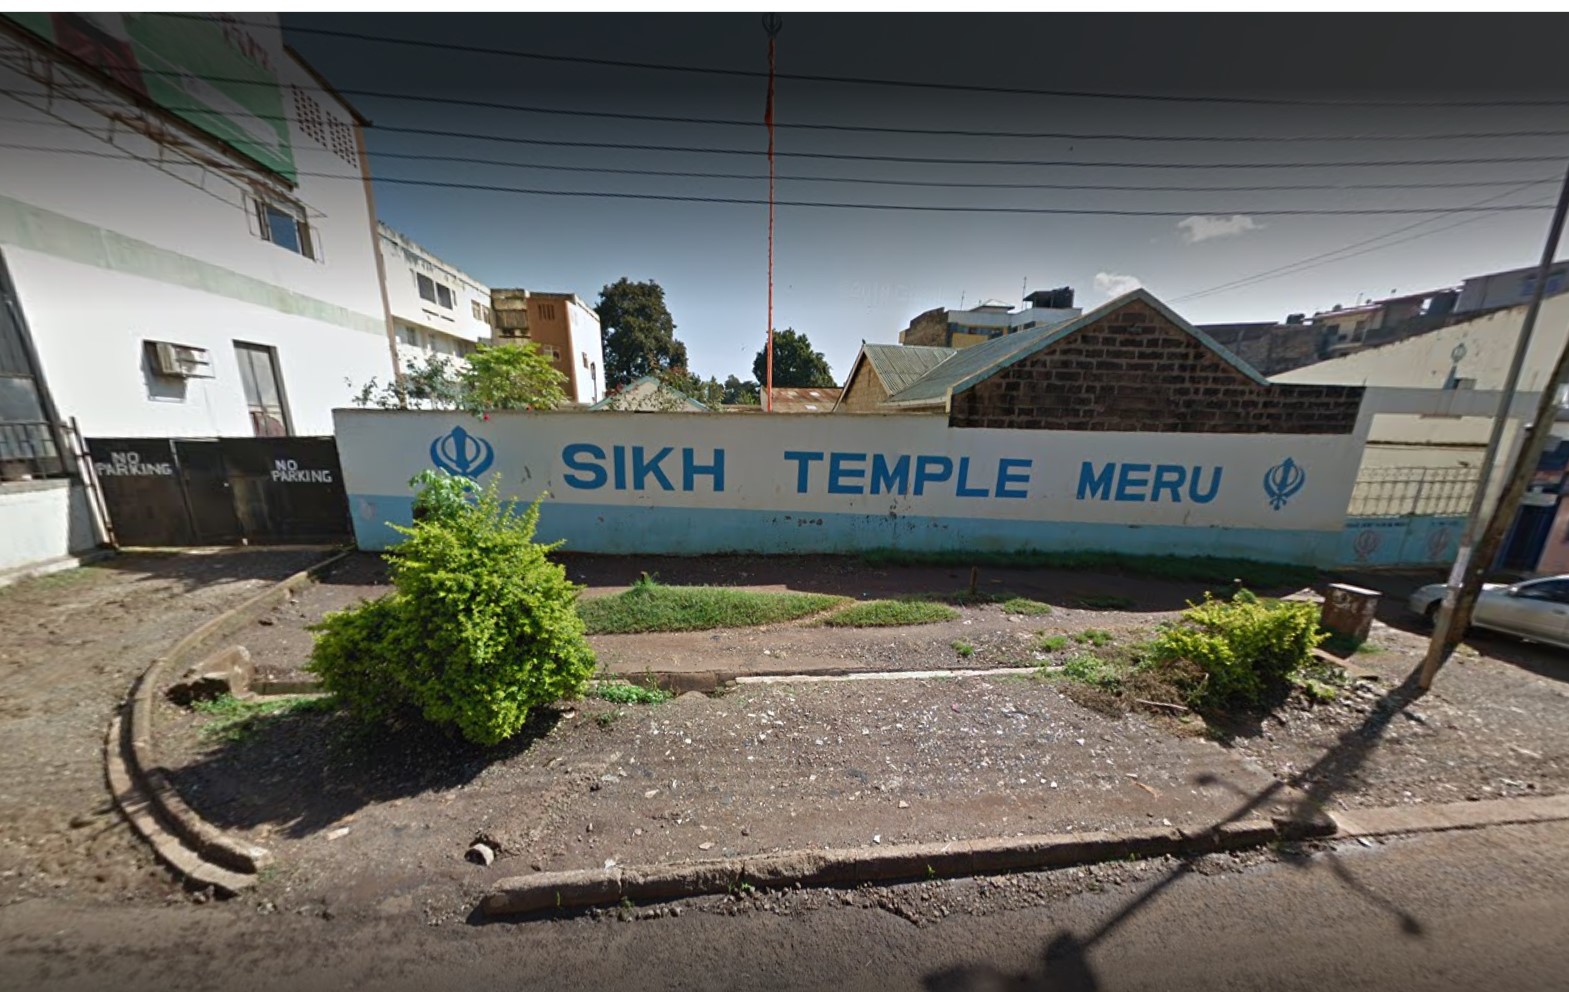 Sikh Temple, Meru